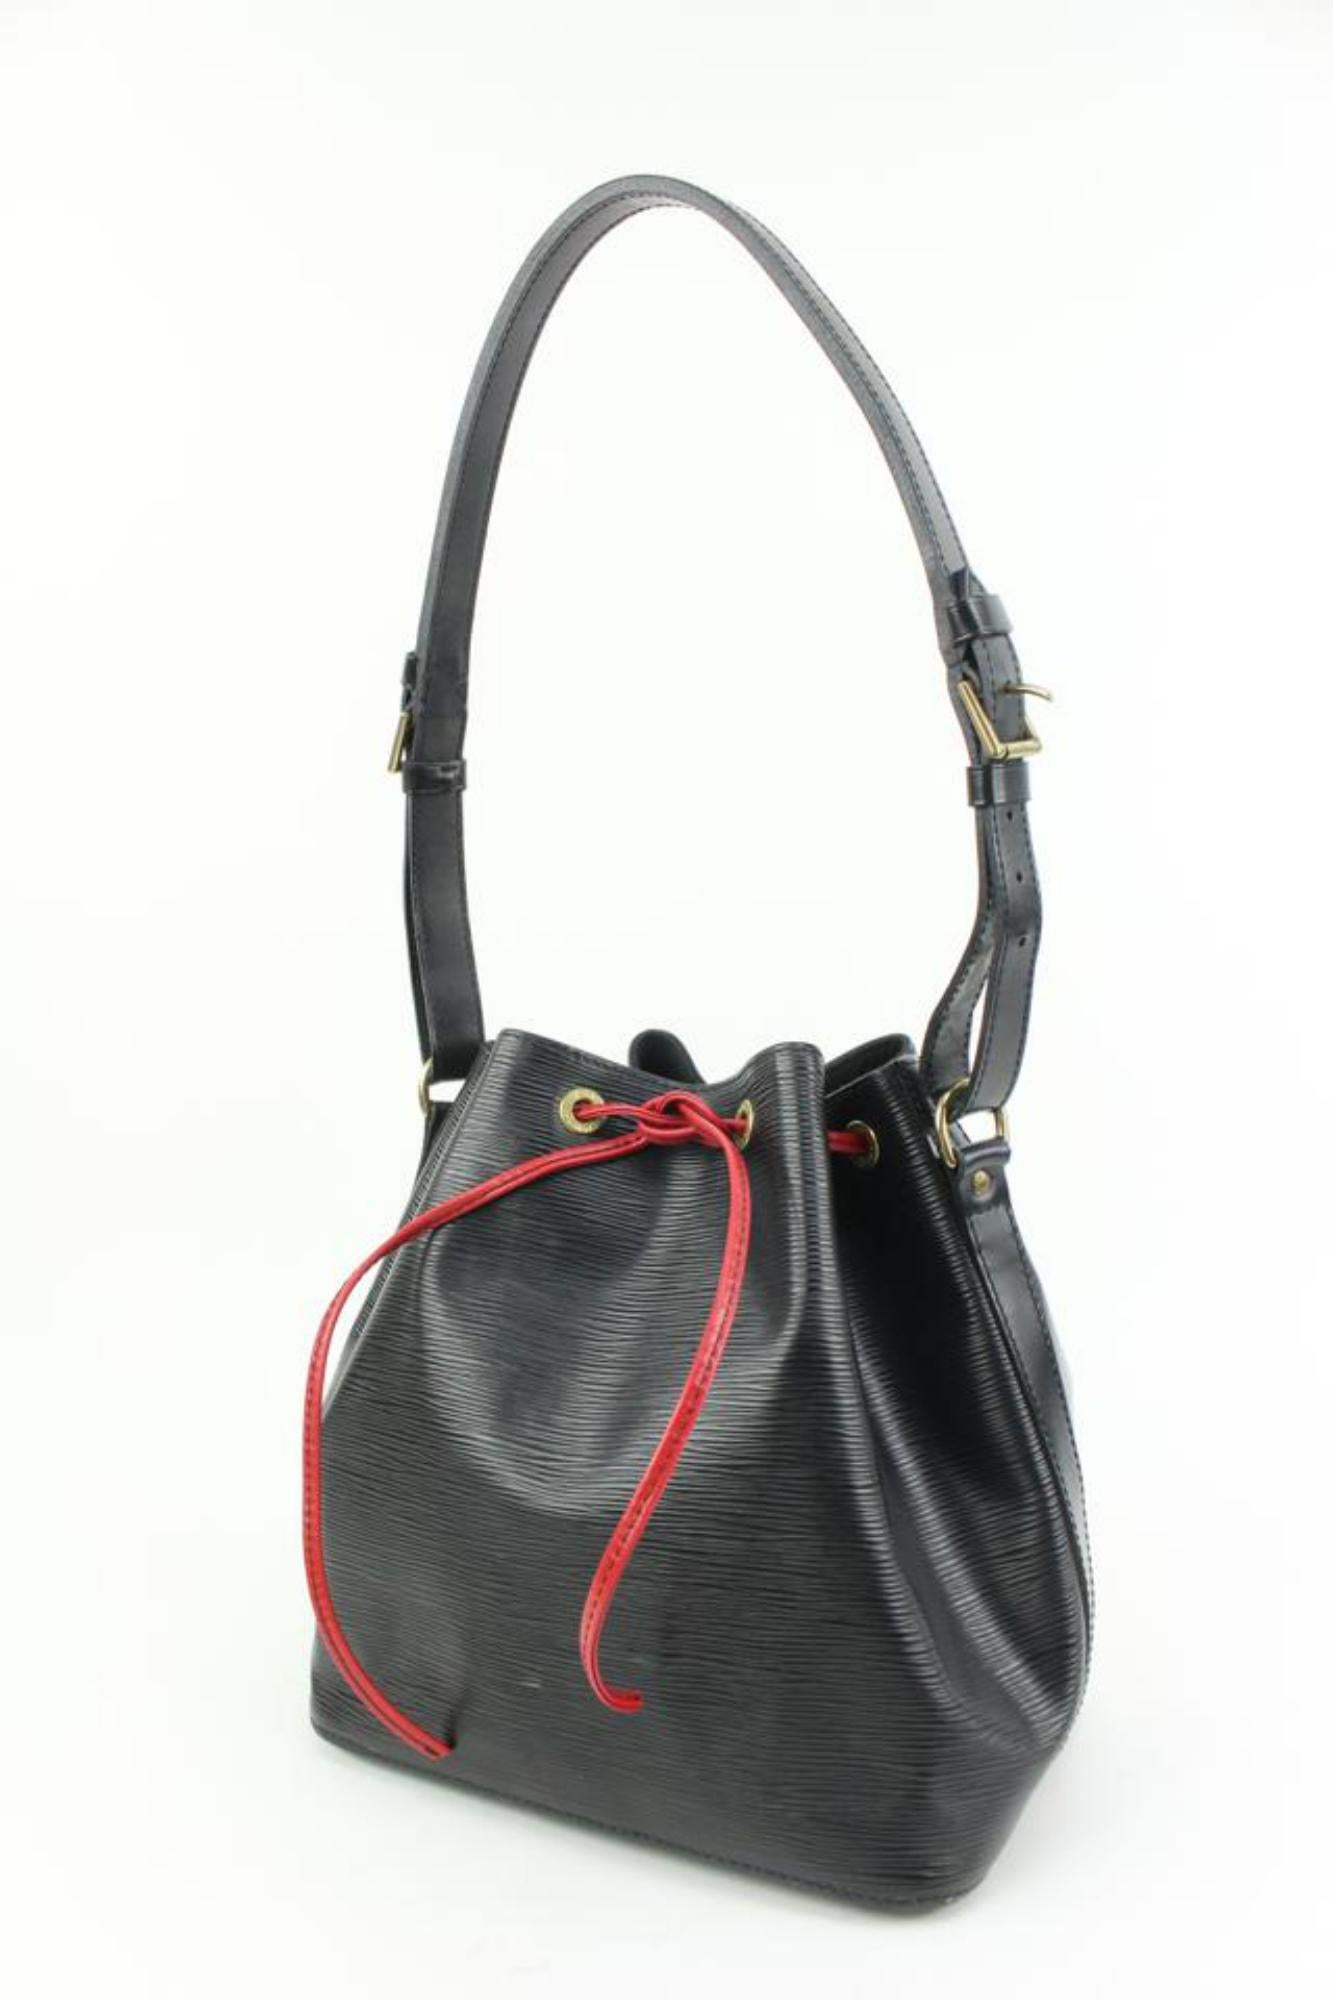 Louis Vuitton Black Epi Leather Petit Noe Drawstring Bucket Bag Hobo 62lk38s
Date Code/Serial Number: AR0934
Made In: France
Measurements: Length:  15.5